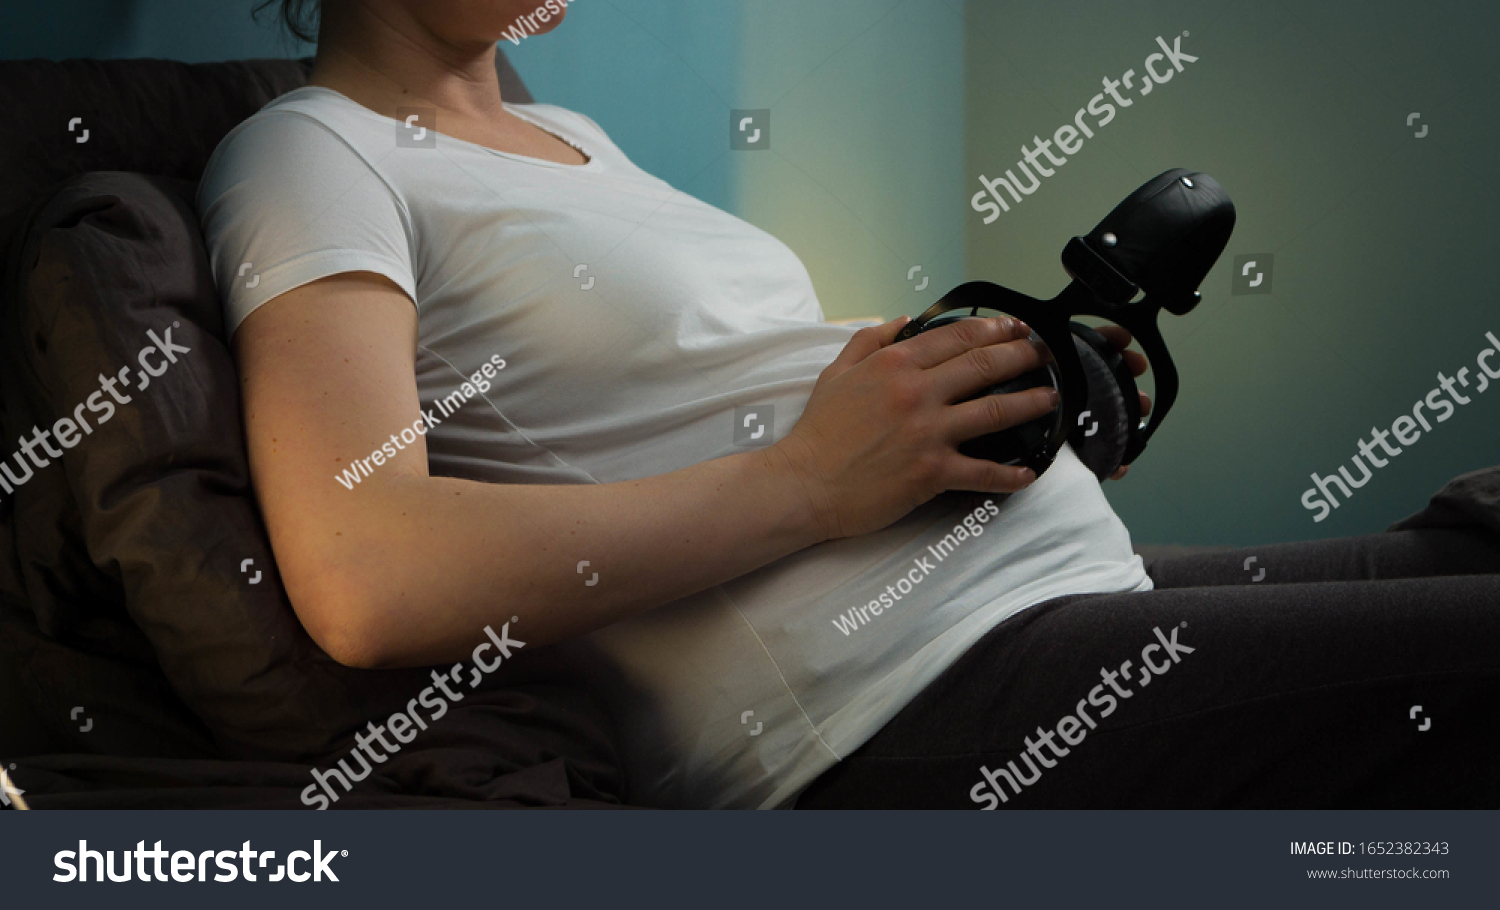 Beautiful Shot Pregnant Woman Bed Holding库存照片1652382343 Shutterstock